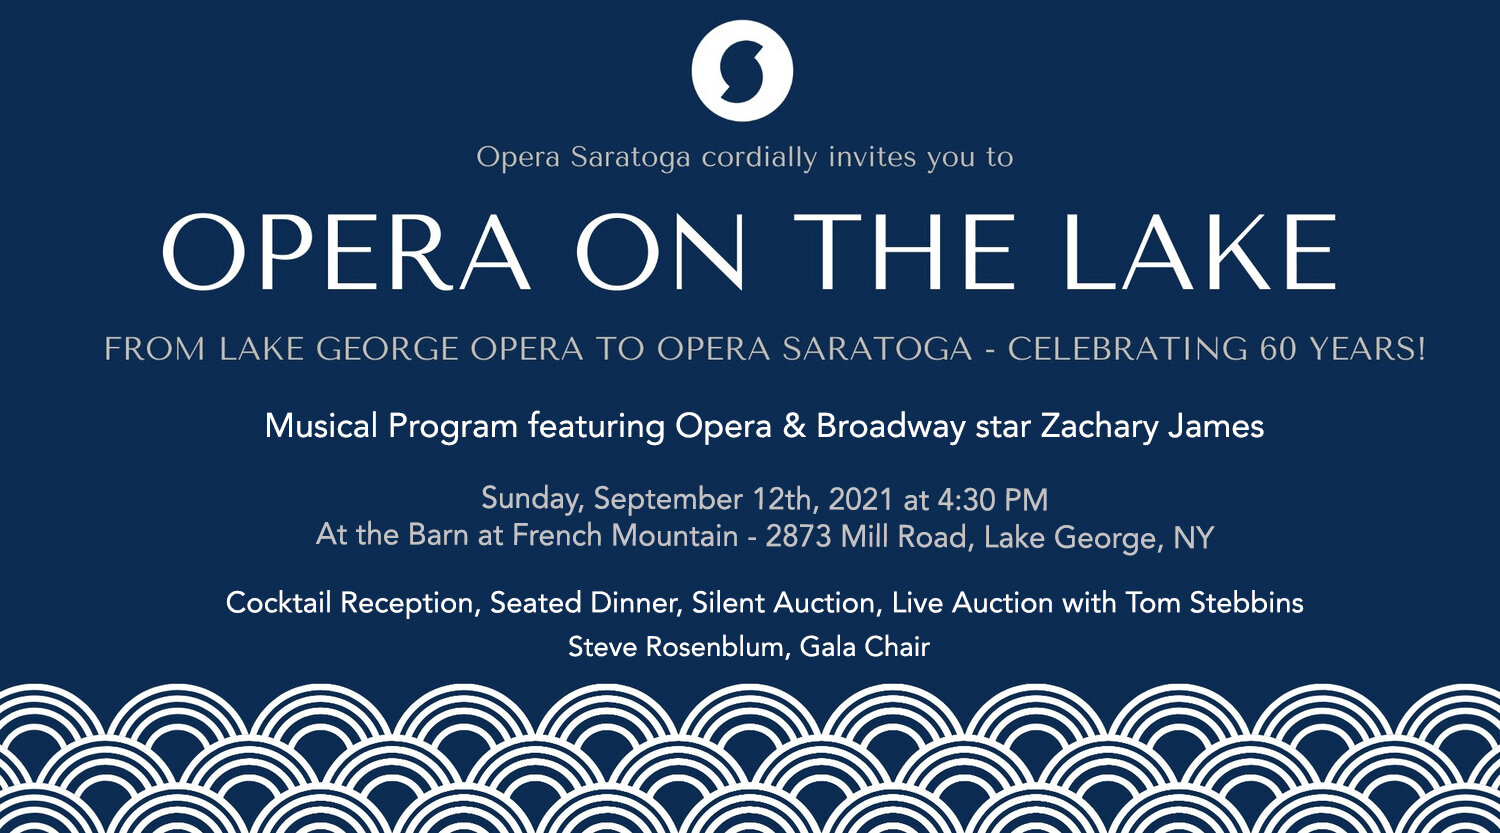 andrageren Lake Taupo godtgørelse Opera on The Lake - Our 60th Anniversary Gala Celebration — Opera Saratoga